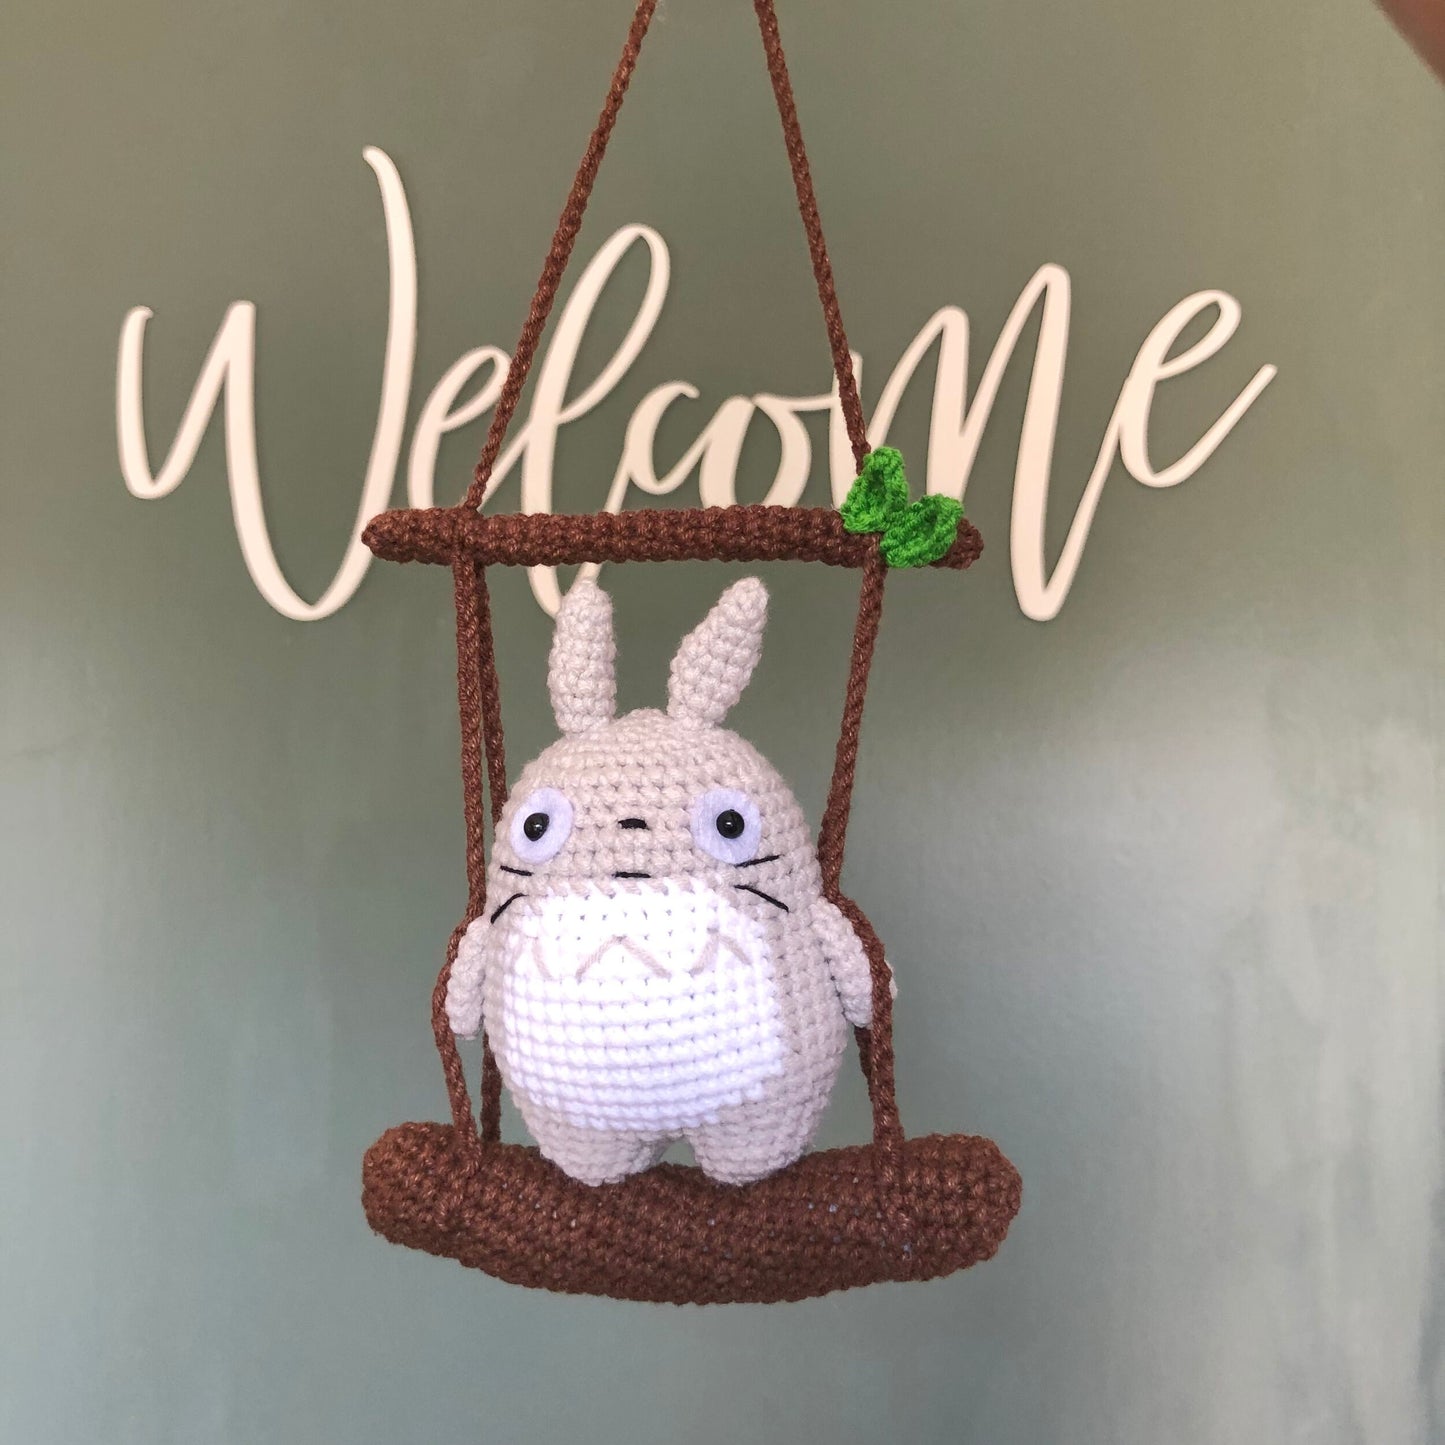 Handmade crochet hanging, car rearview mirror charm crochet amigurumi, plushie toy, gift, car hanging accessory